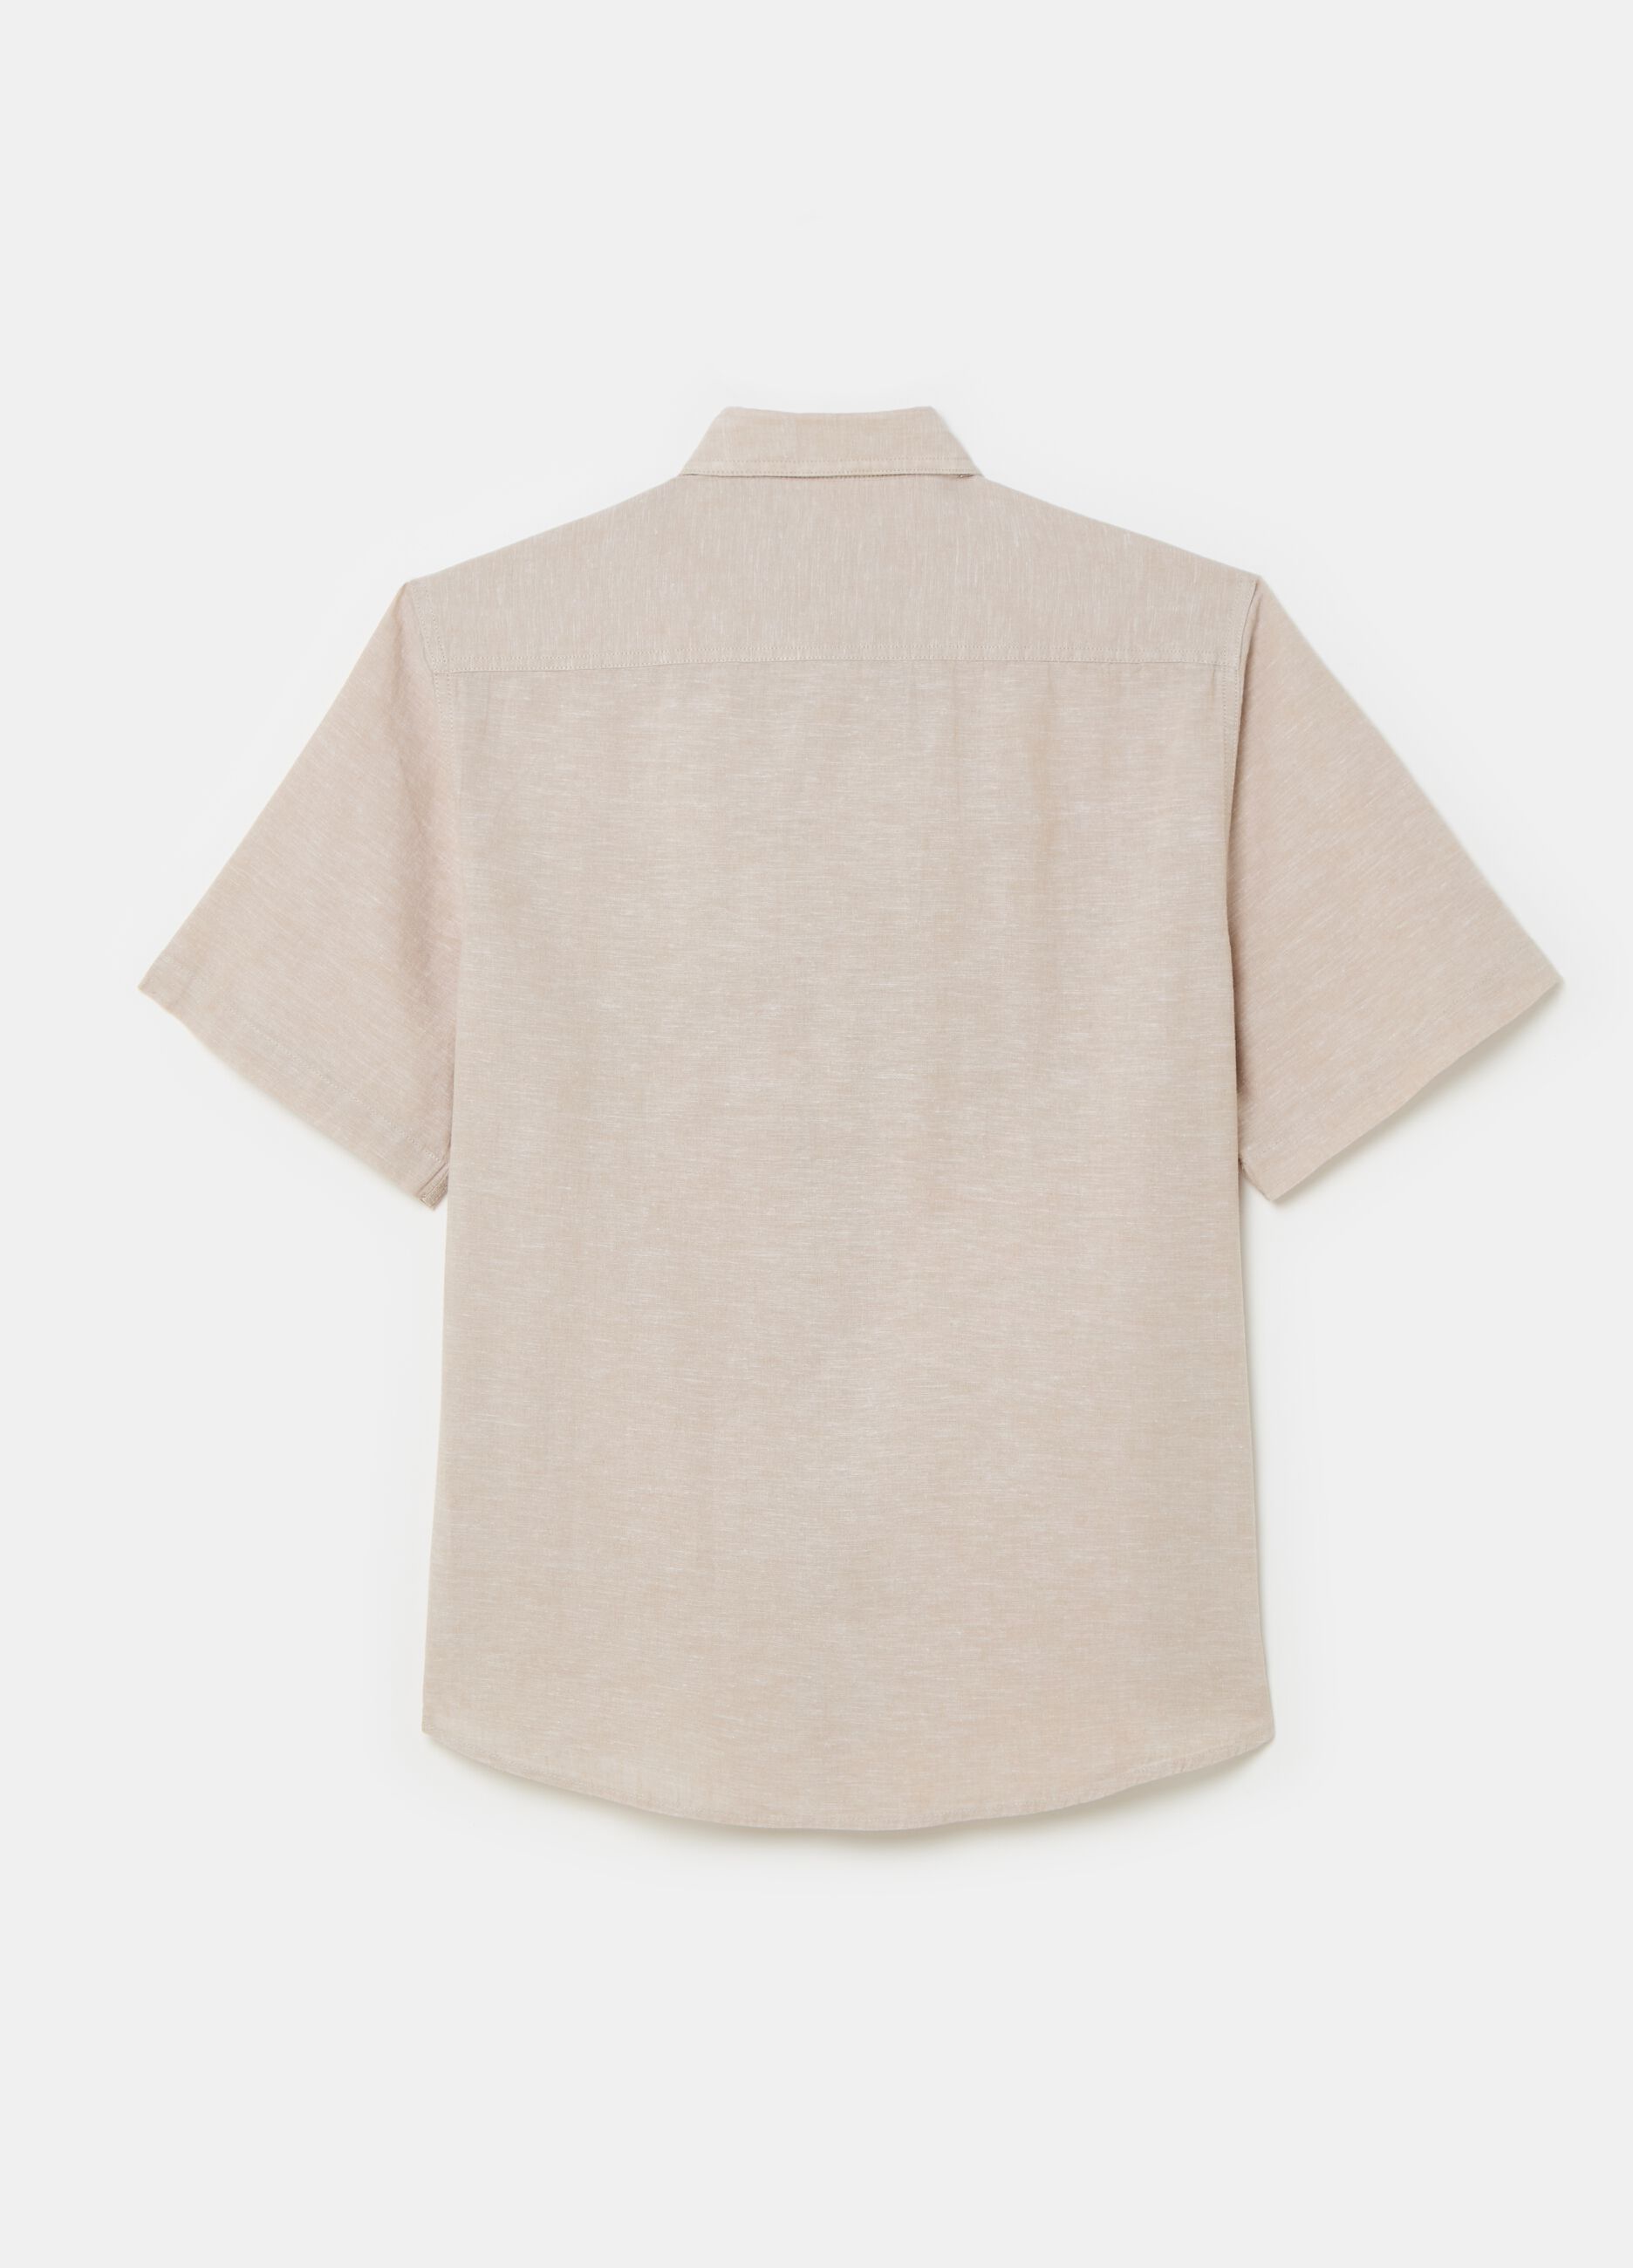 Linen and cotton short-sleeved shirt